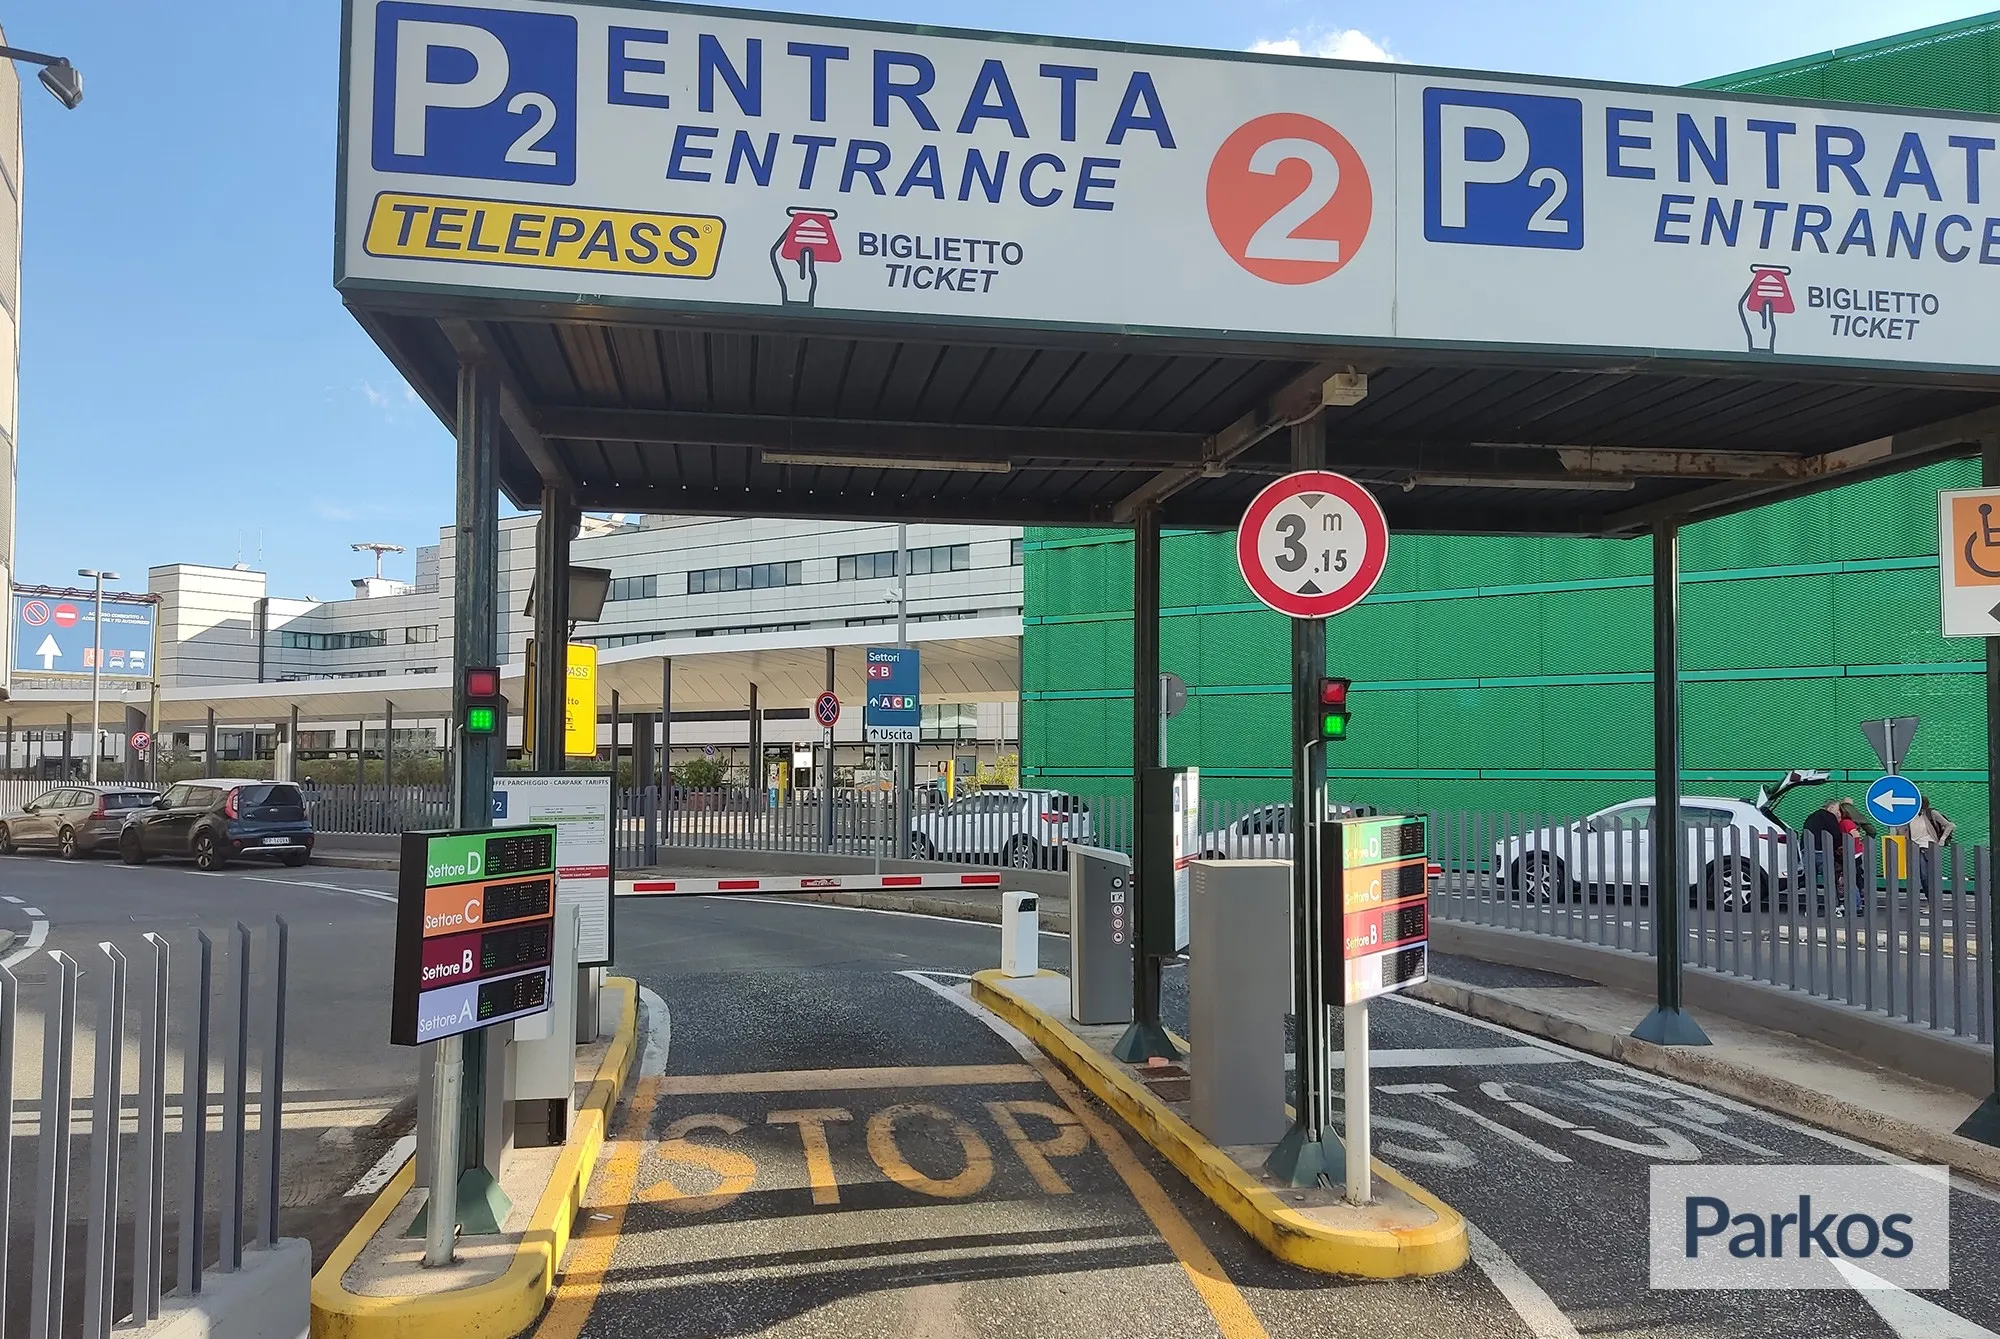 Toscana Aeroporti P2 Multipiano (Paga online) - Parking Pisa Airport - picture 1